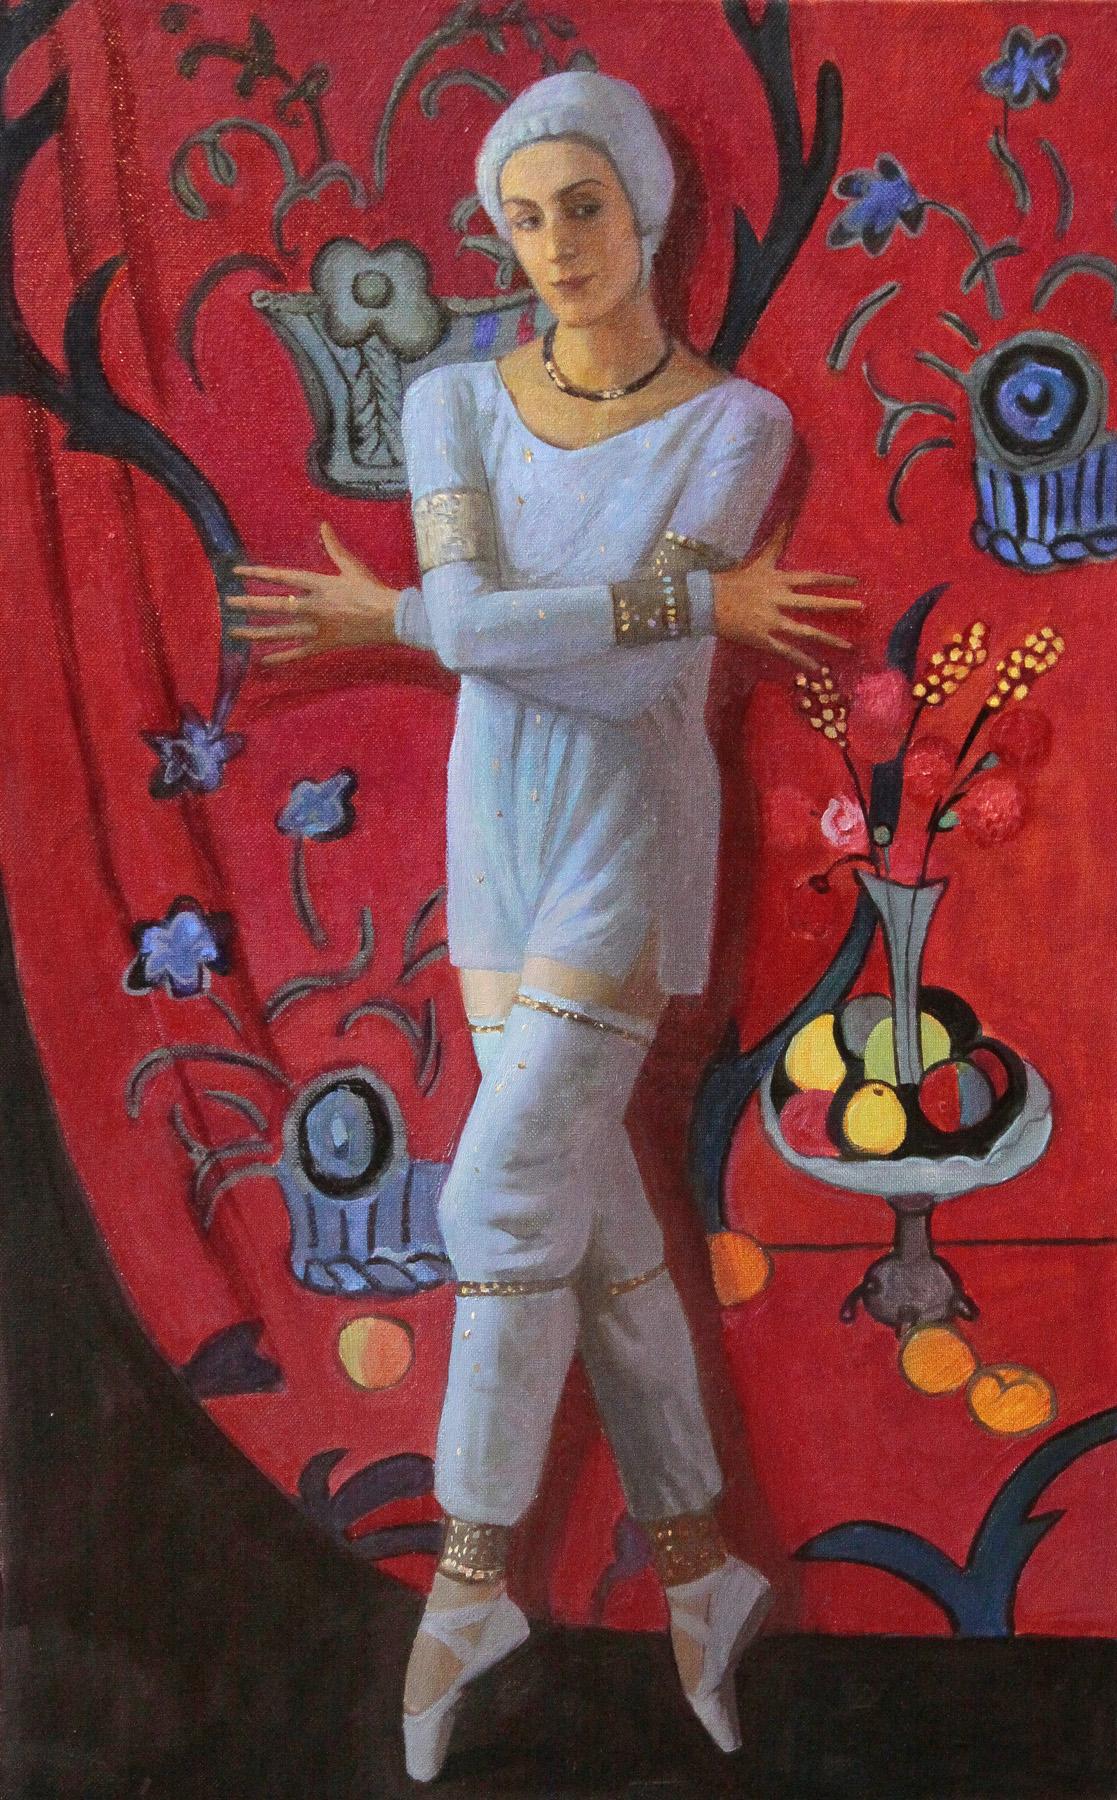 Alicia Markova in costume nightingale Matisse. Original modern art painting